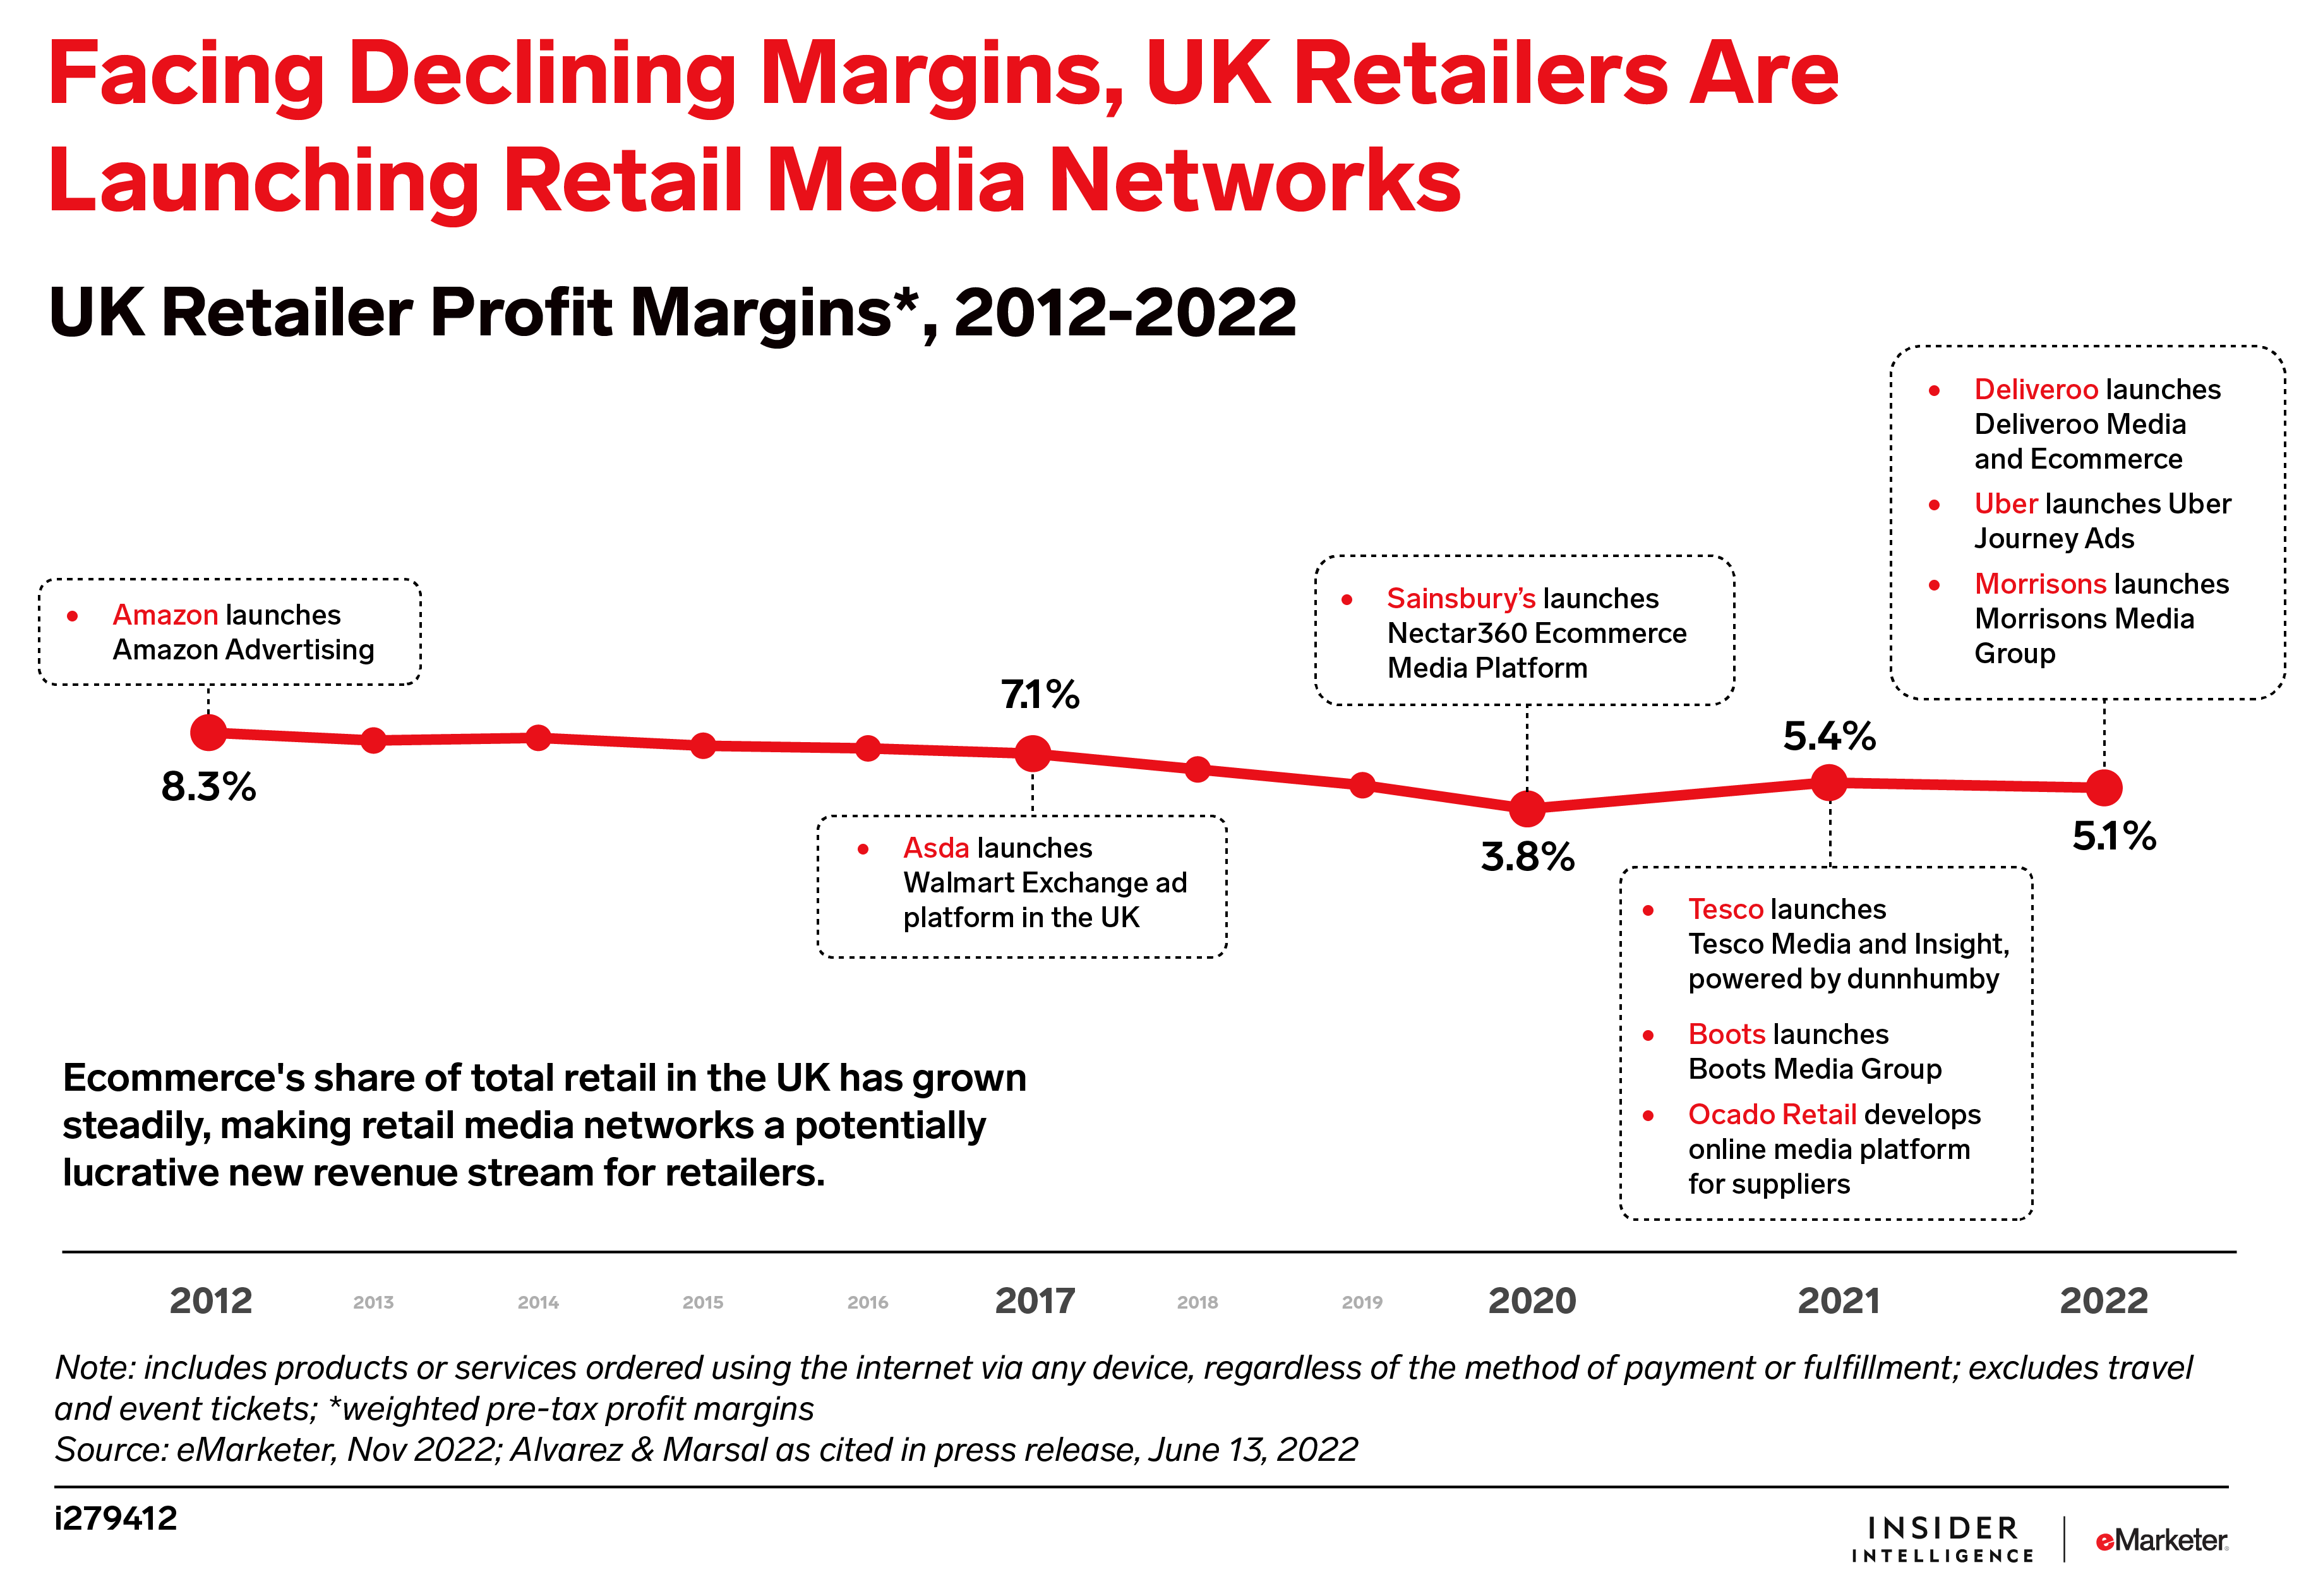 Facing Declining Margins, UK Retailers Are Launching Retail Media Networks. (UK Retailer Profit Margins, 2012-2022)